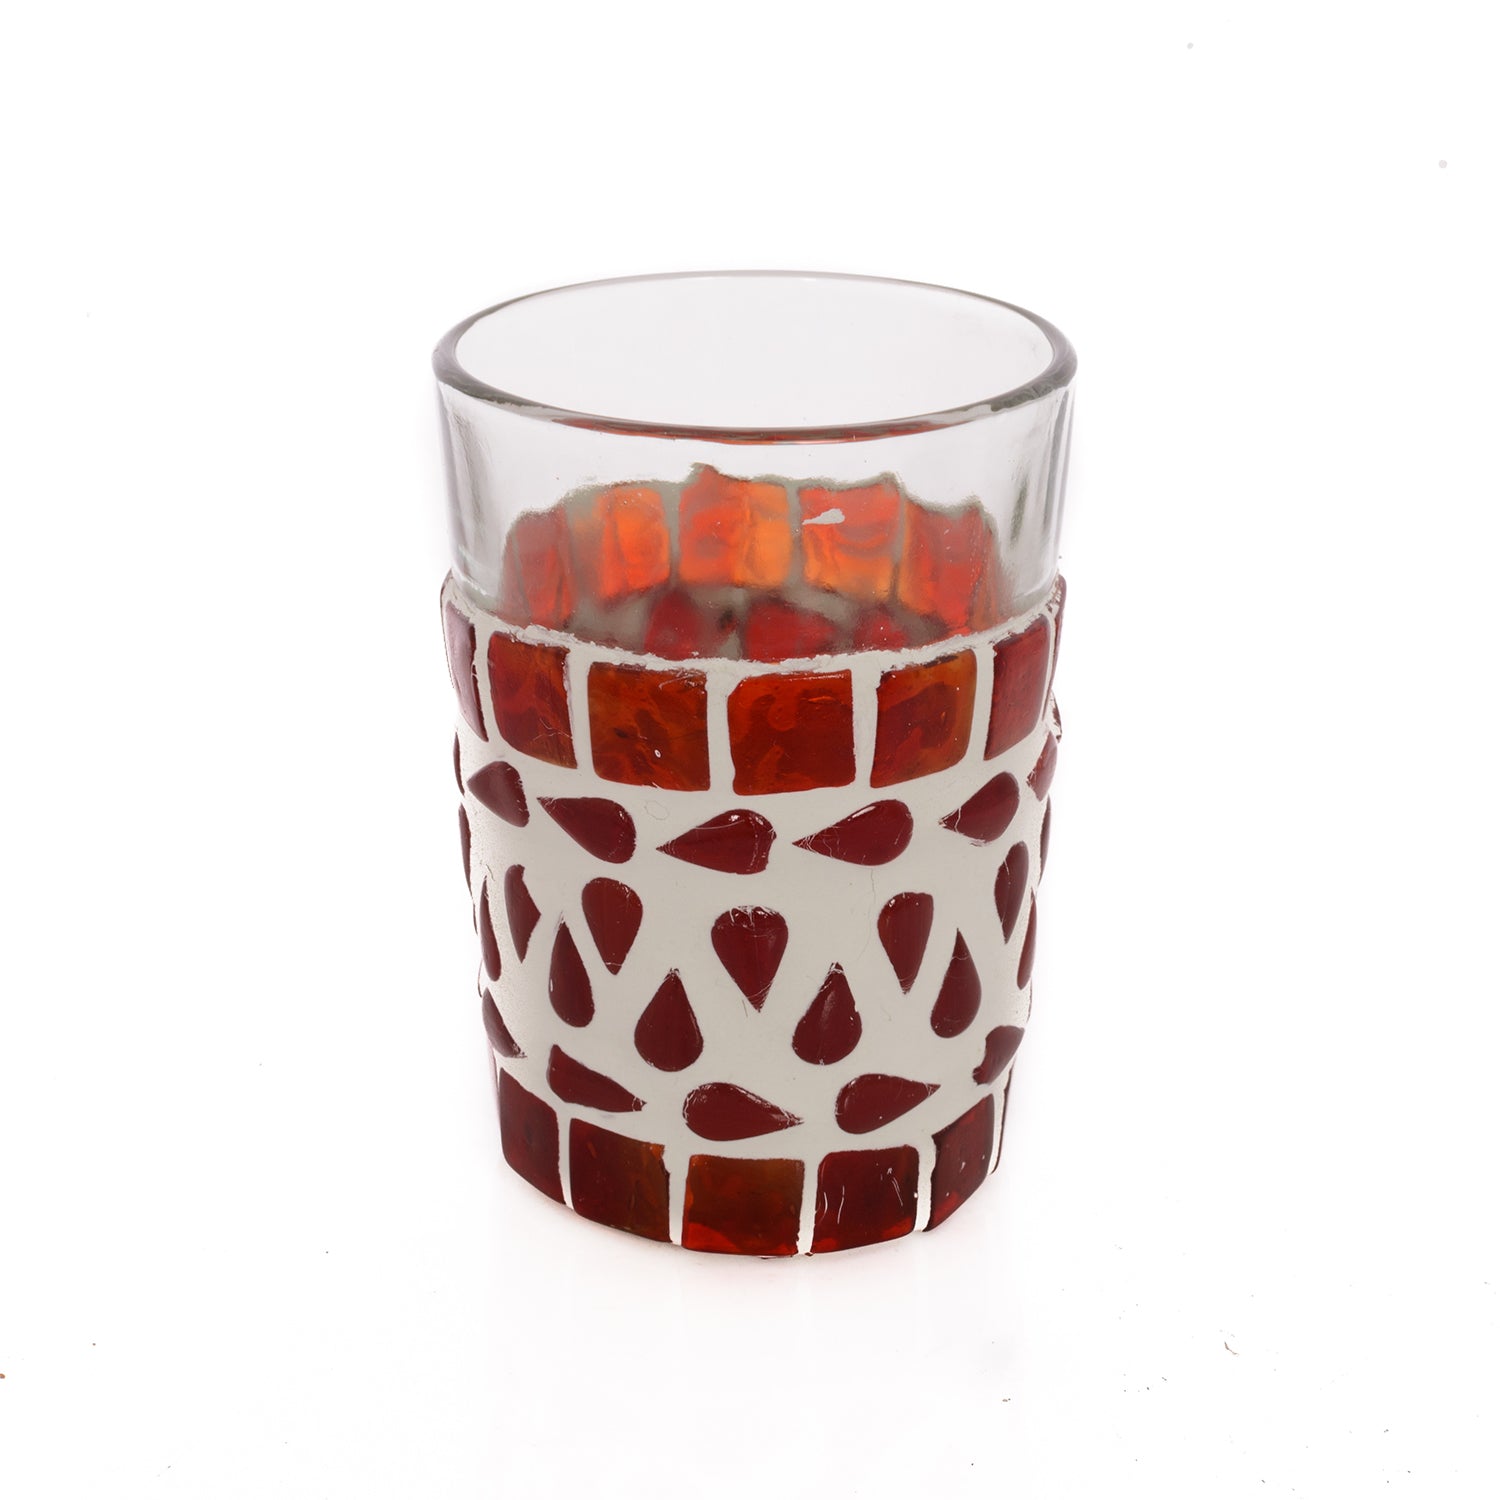 KAUSHALAM MOSAIC TEA GLASS SET: RED